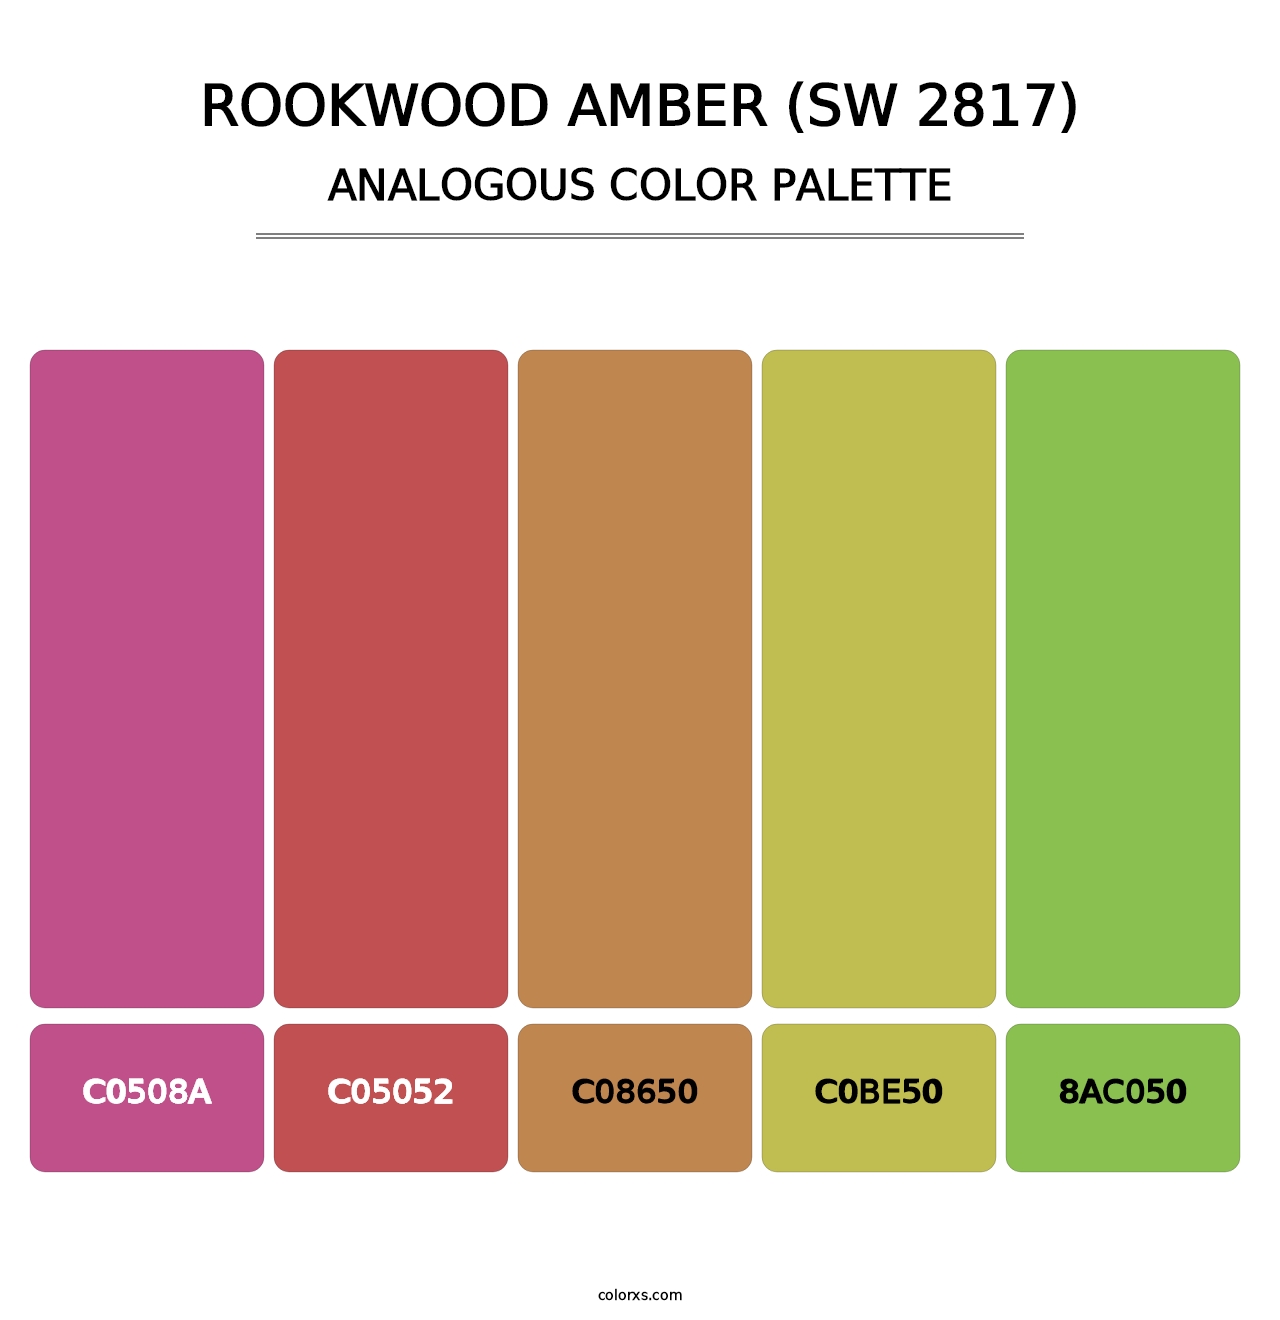 Rookwood Amber (SW 2817) - Analogous Color Palette